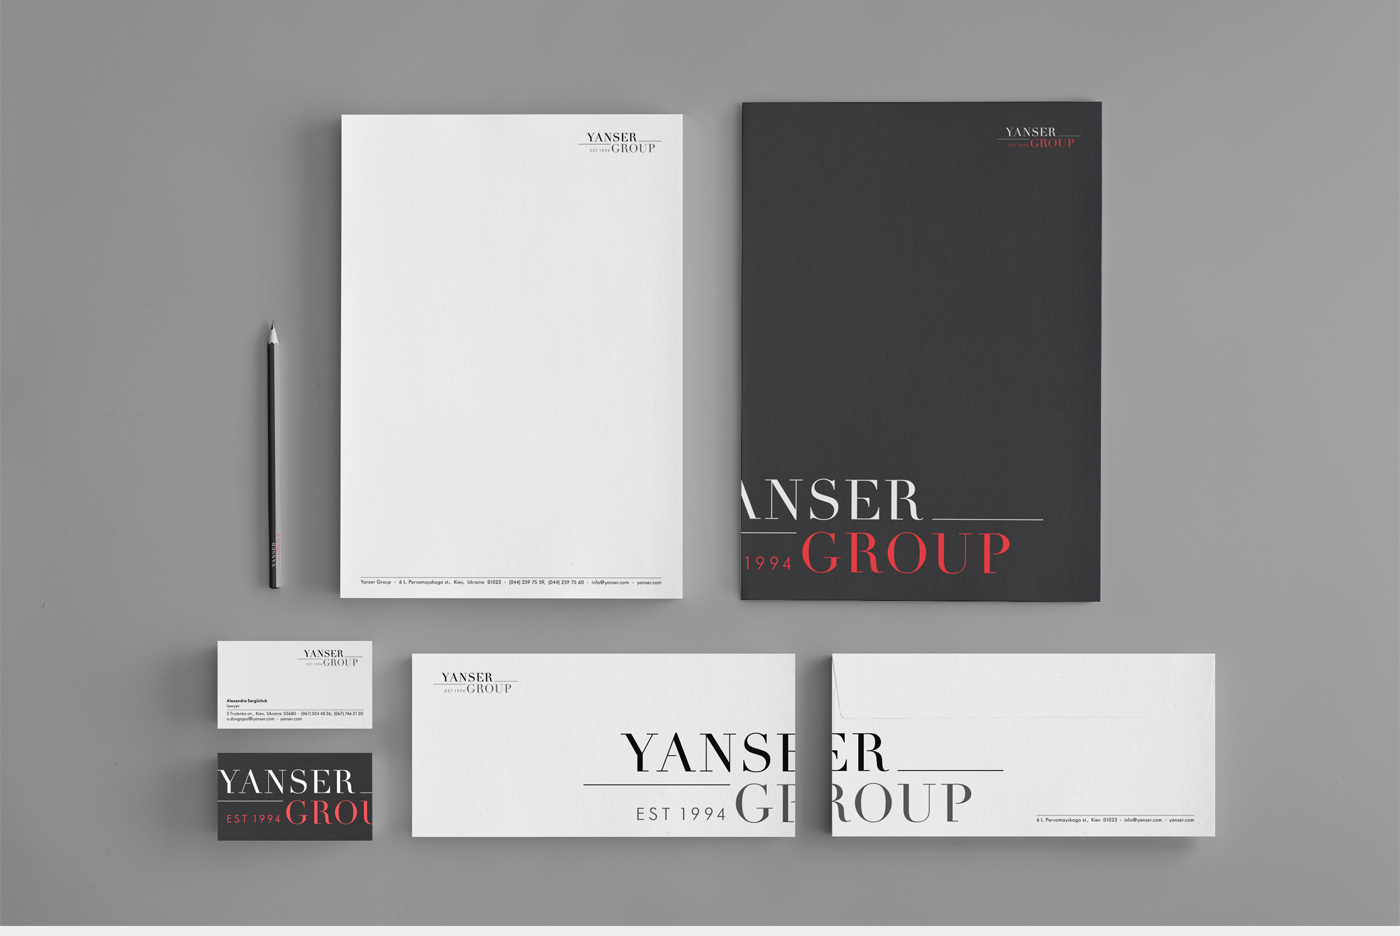 Yanser group Yanser Group logo Logotype identity business card girl woman socks stockings tights underwear legs calendar